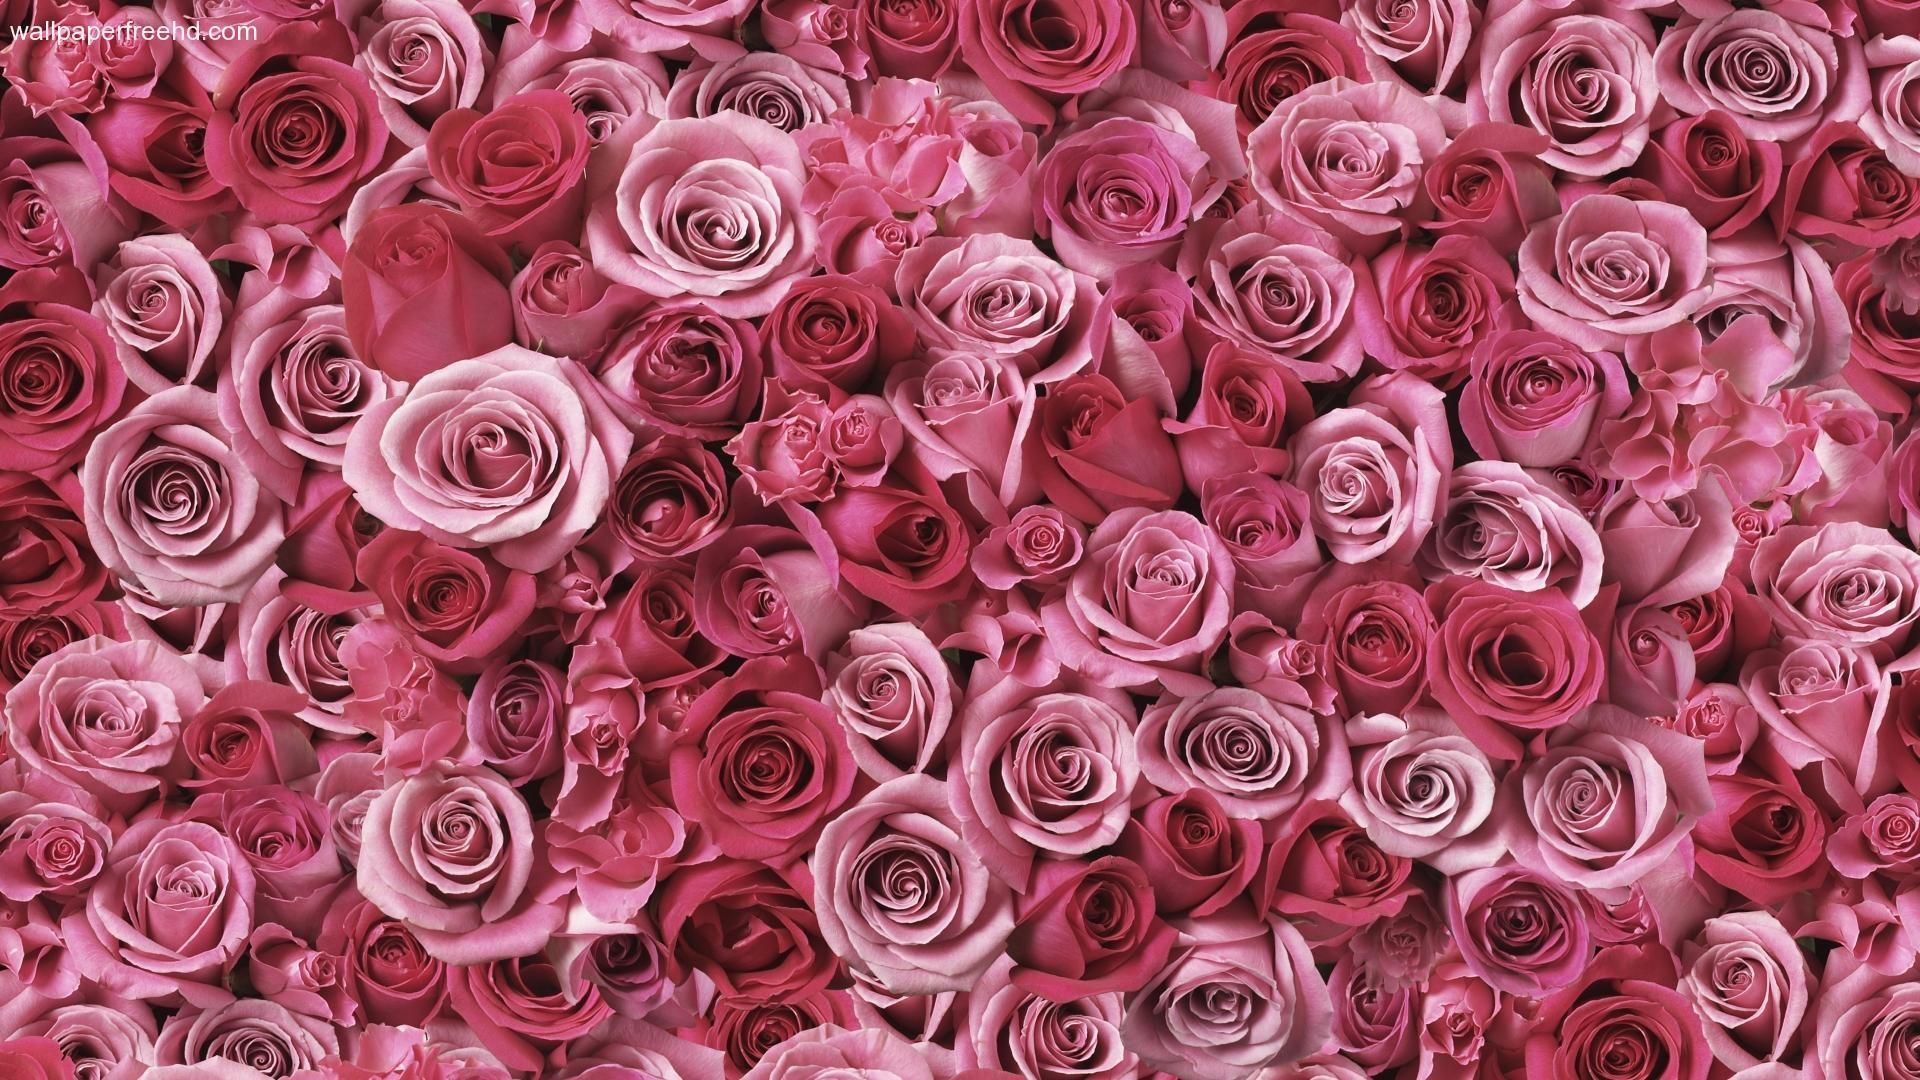 Vintage Rose Wallpaper Pink 1920x1080